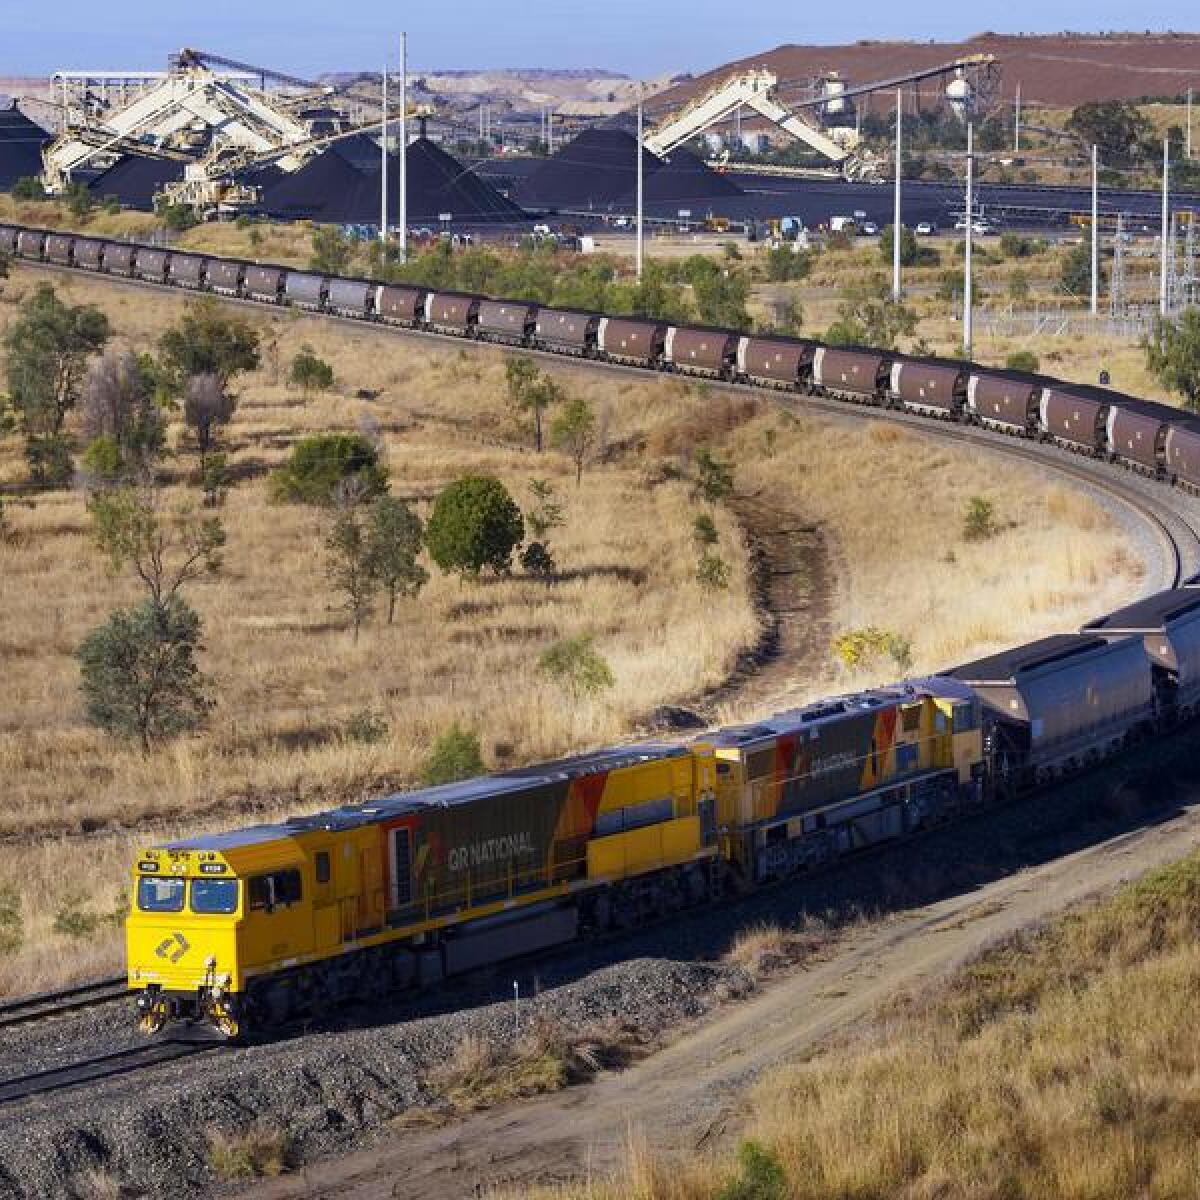 A freight train hauling coal in Moura